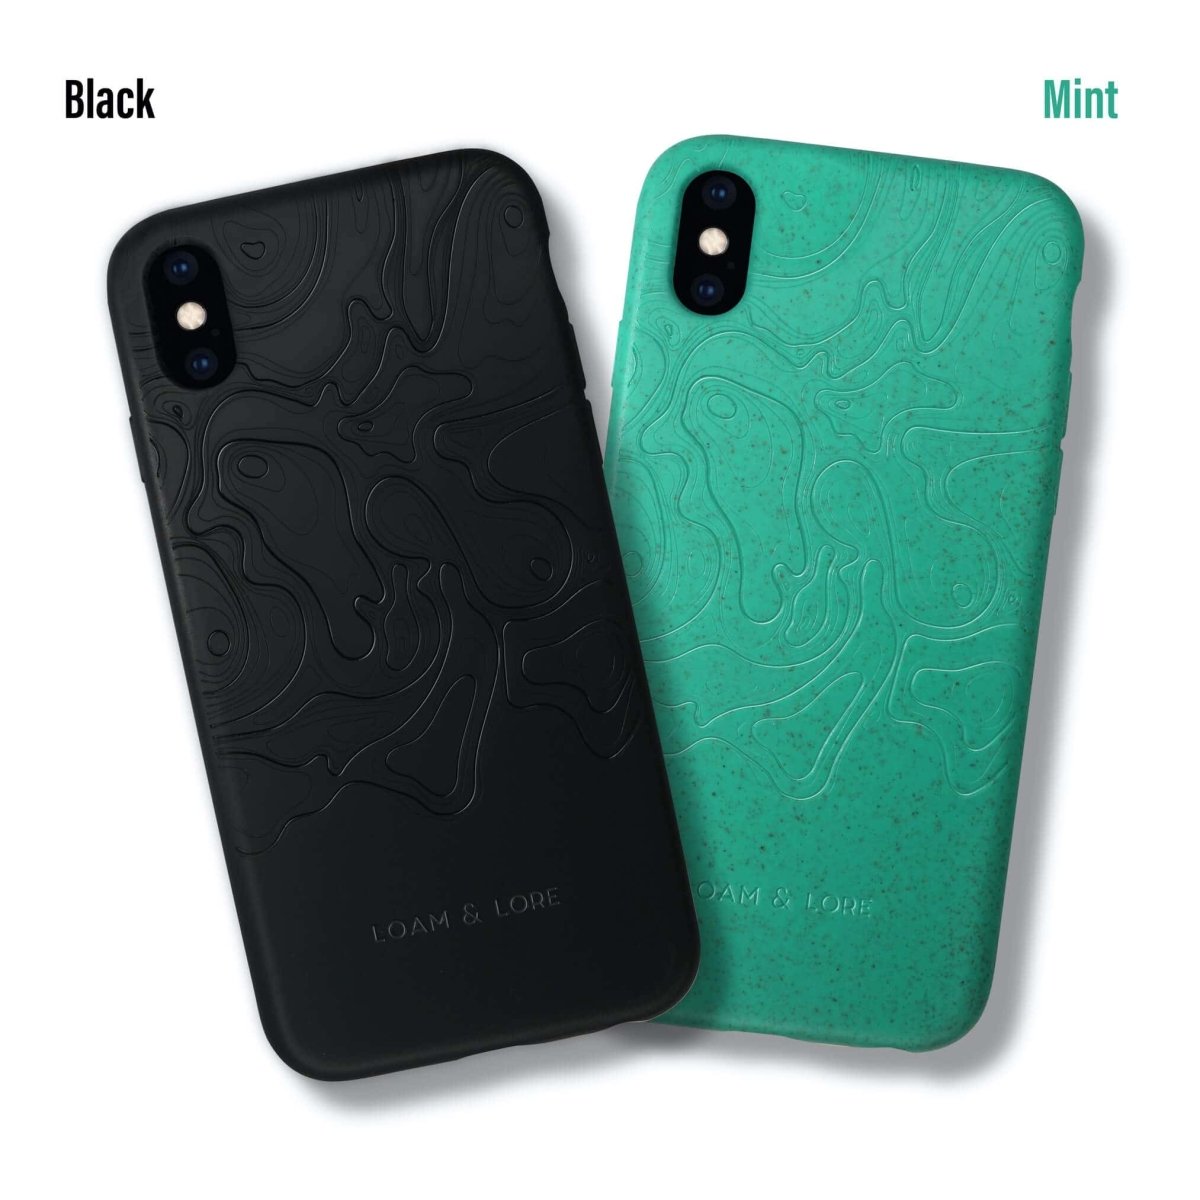 Sale - Biodegradable iPhone XS Max Case - Loam & Lore